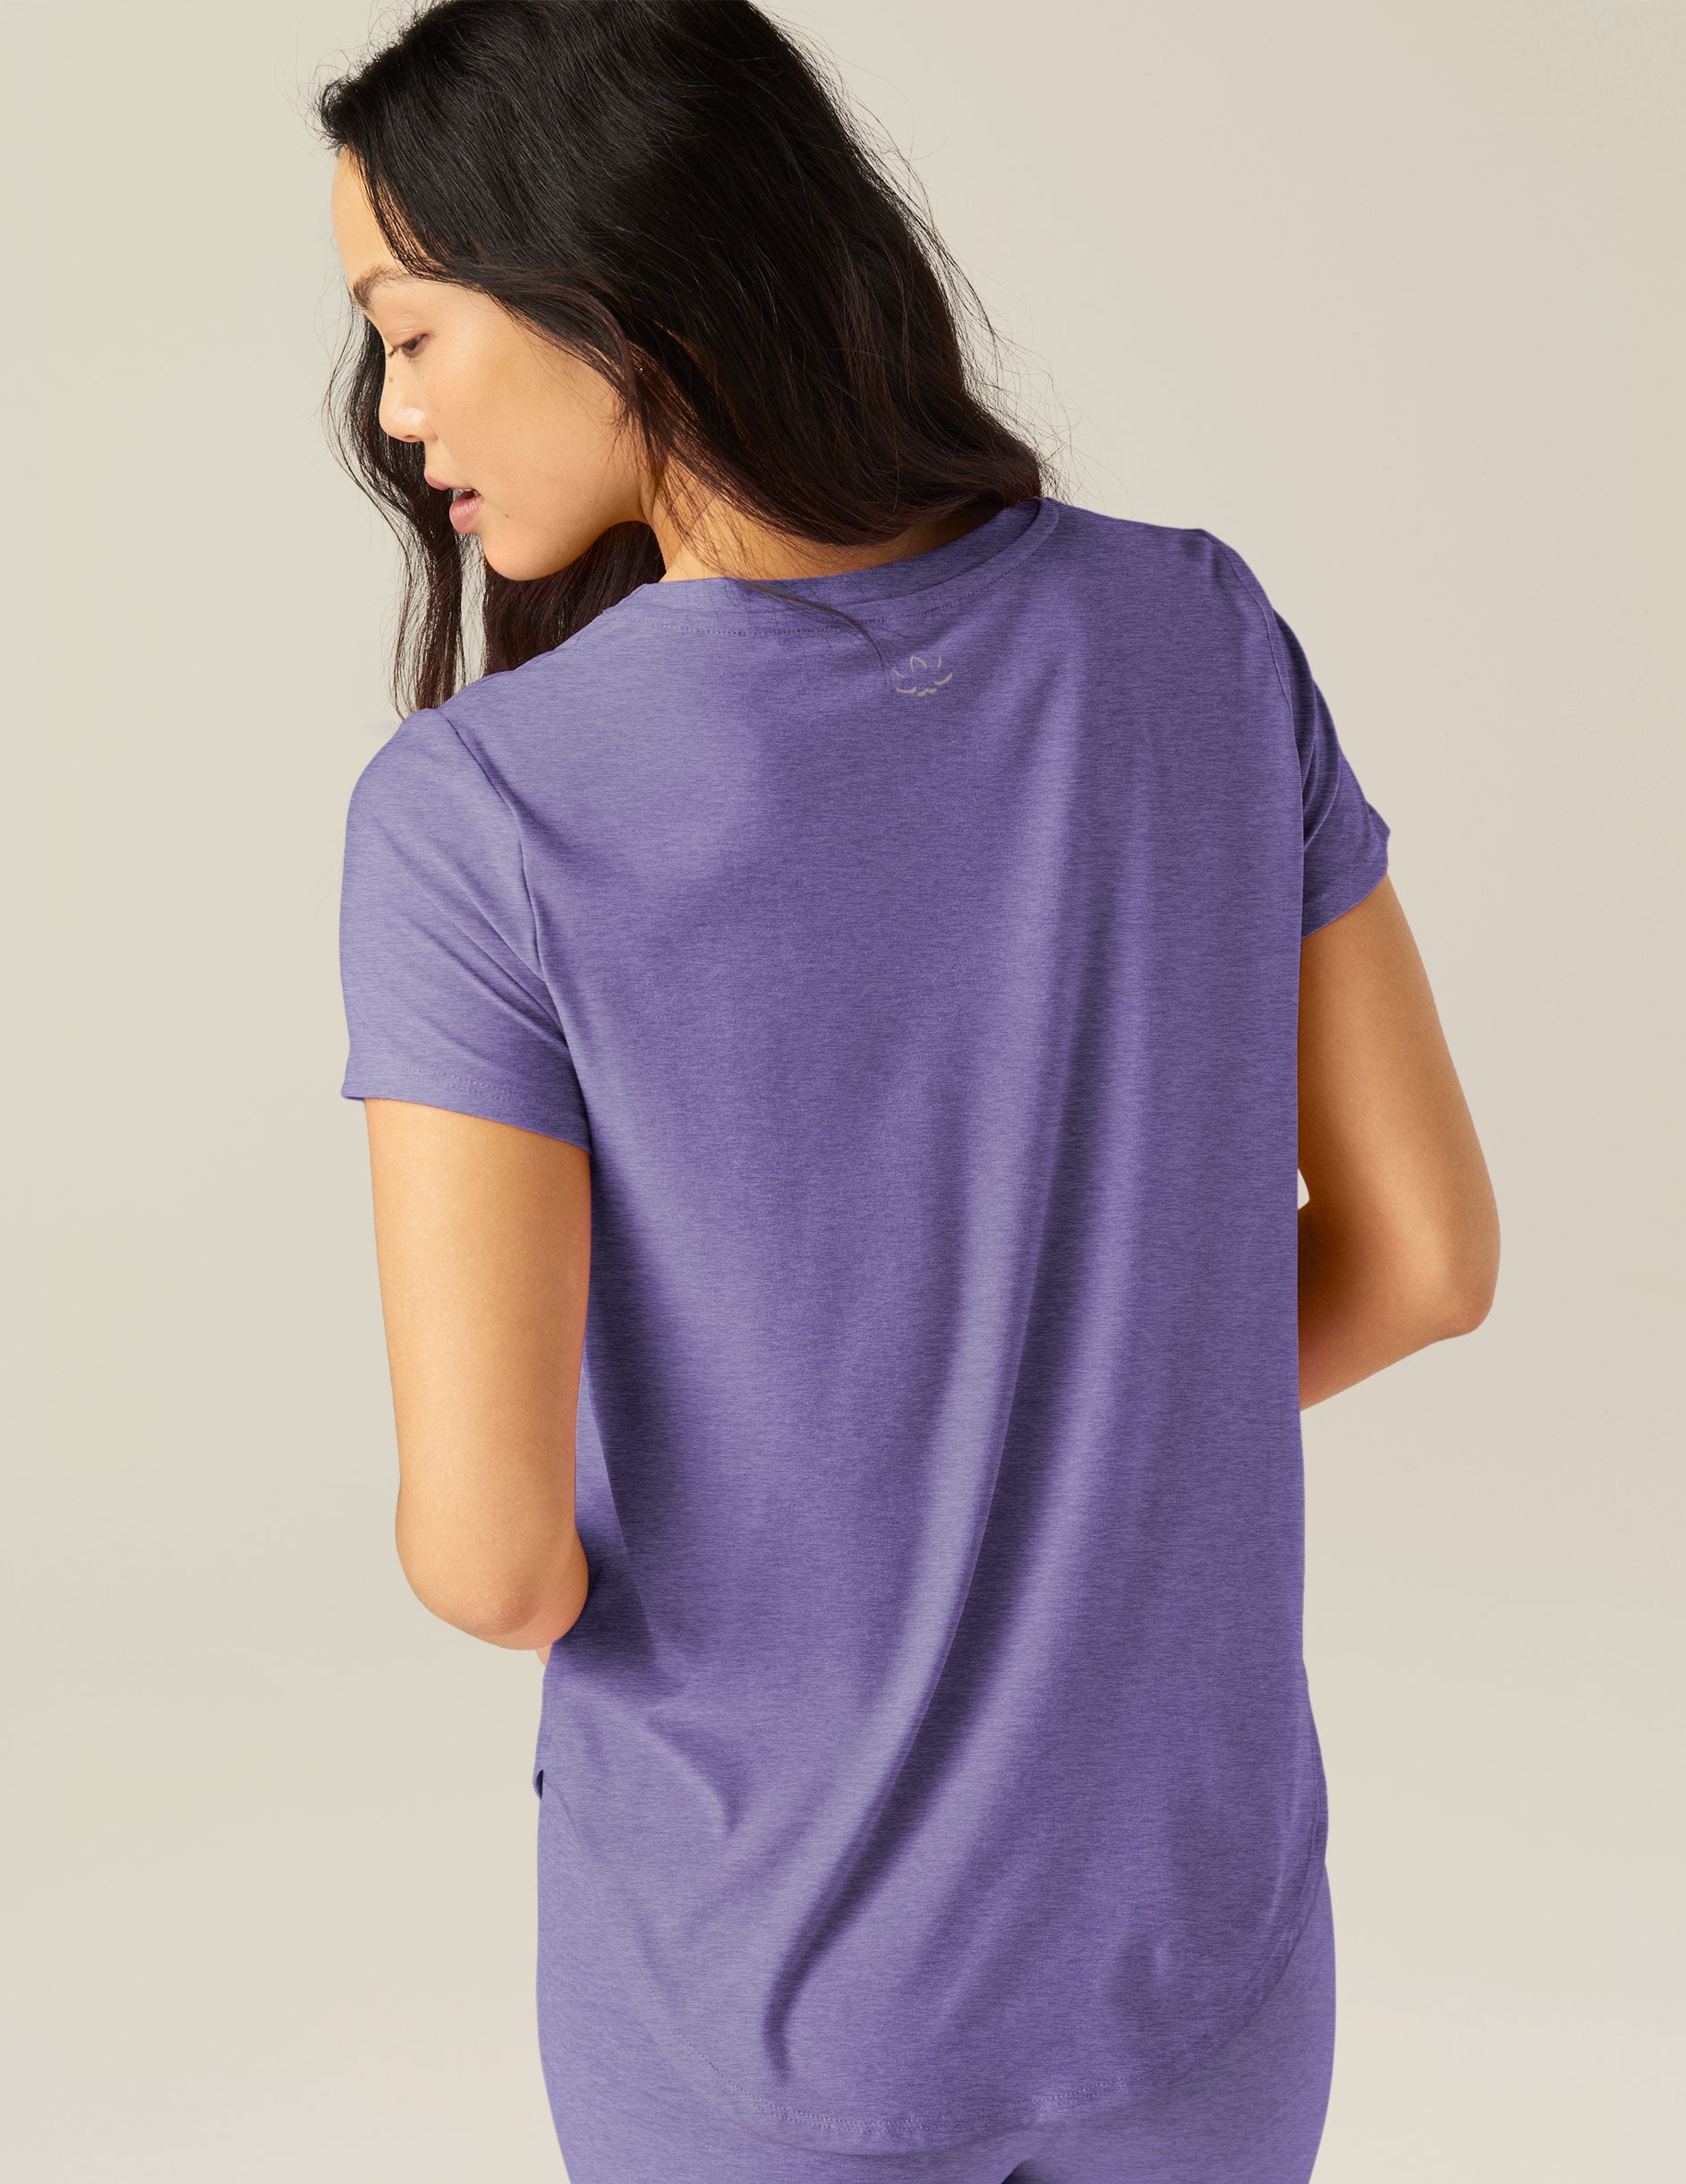 purple short sleeve crew neck t-shirt.